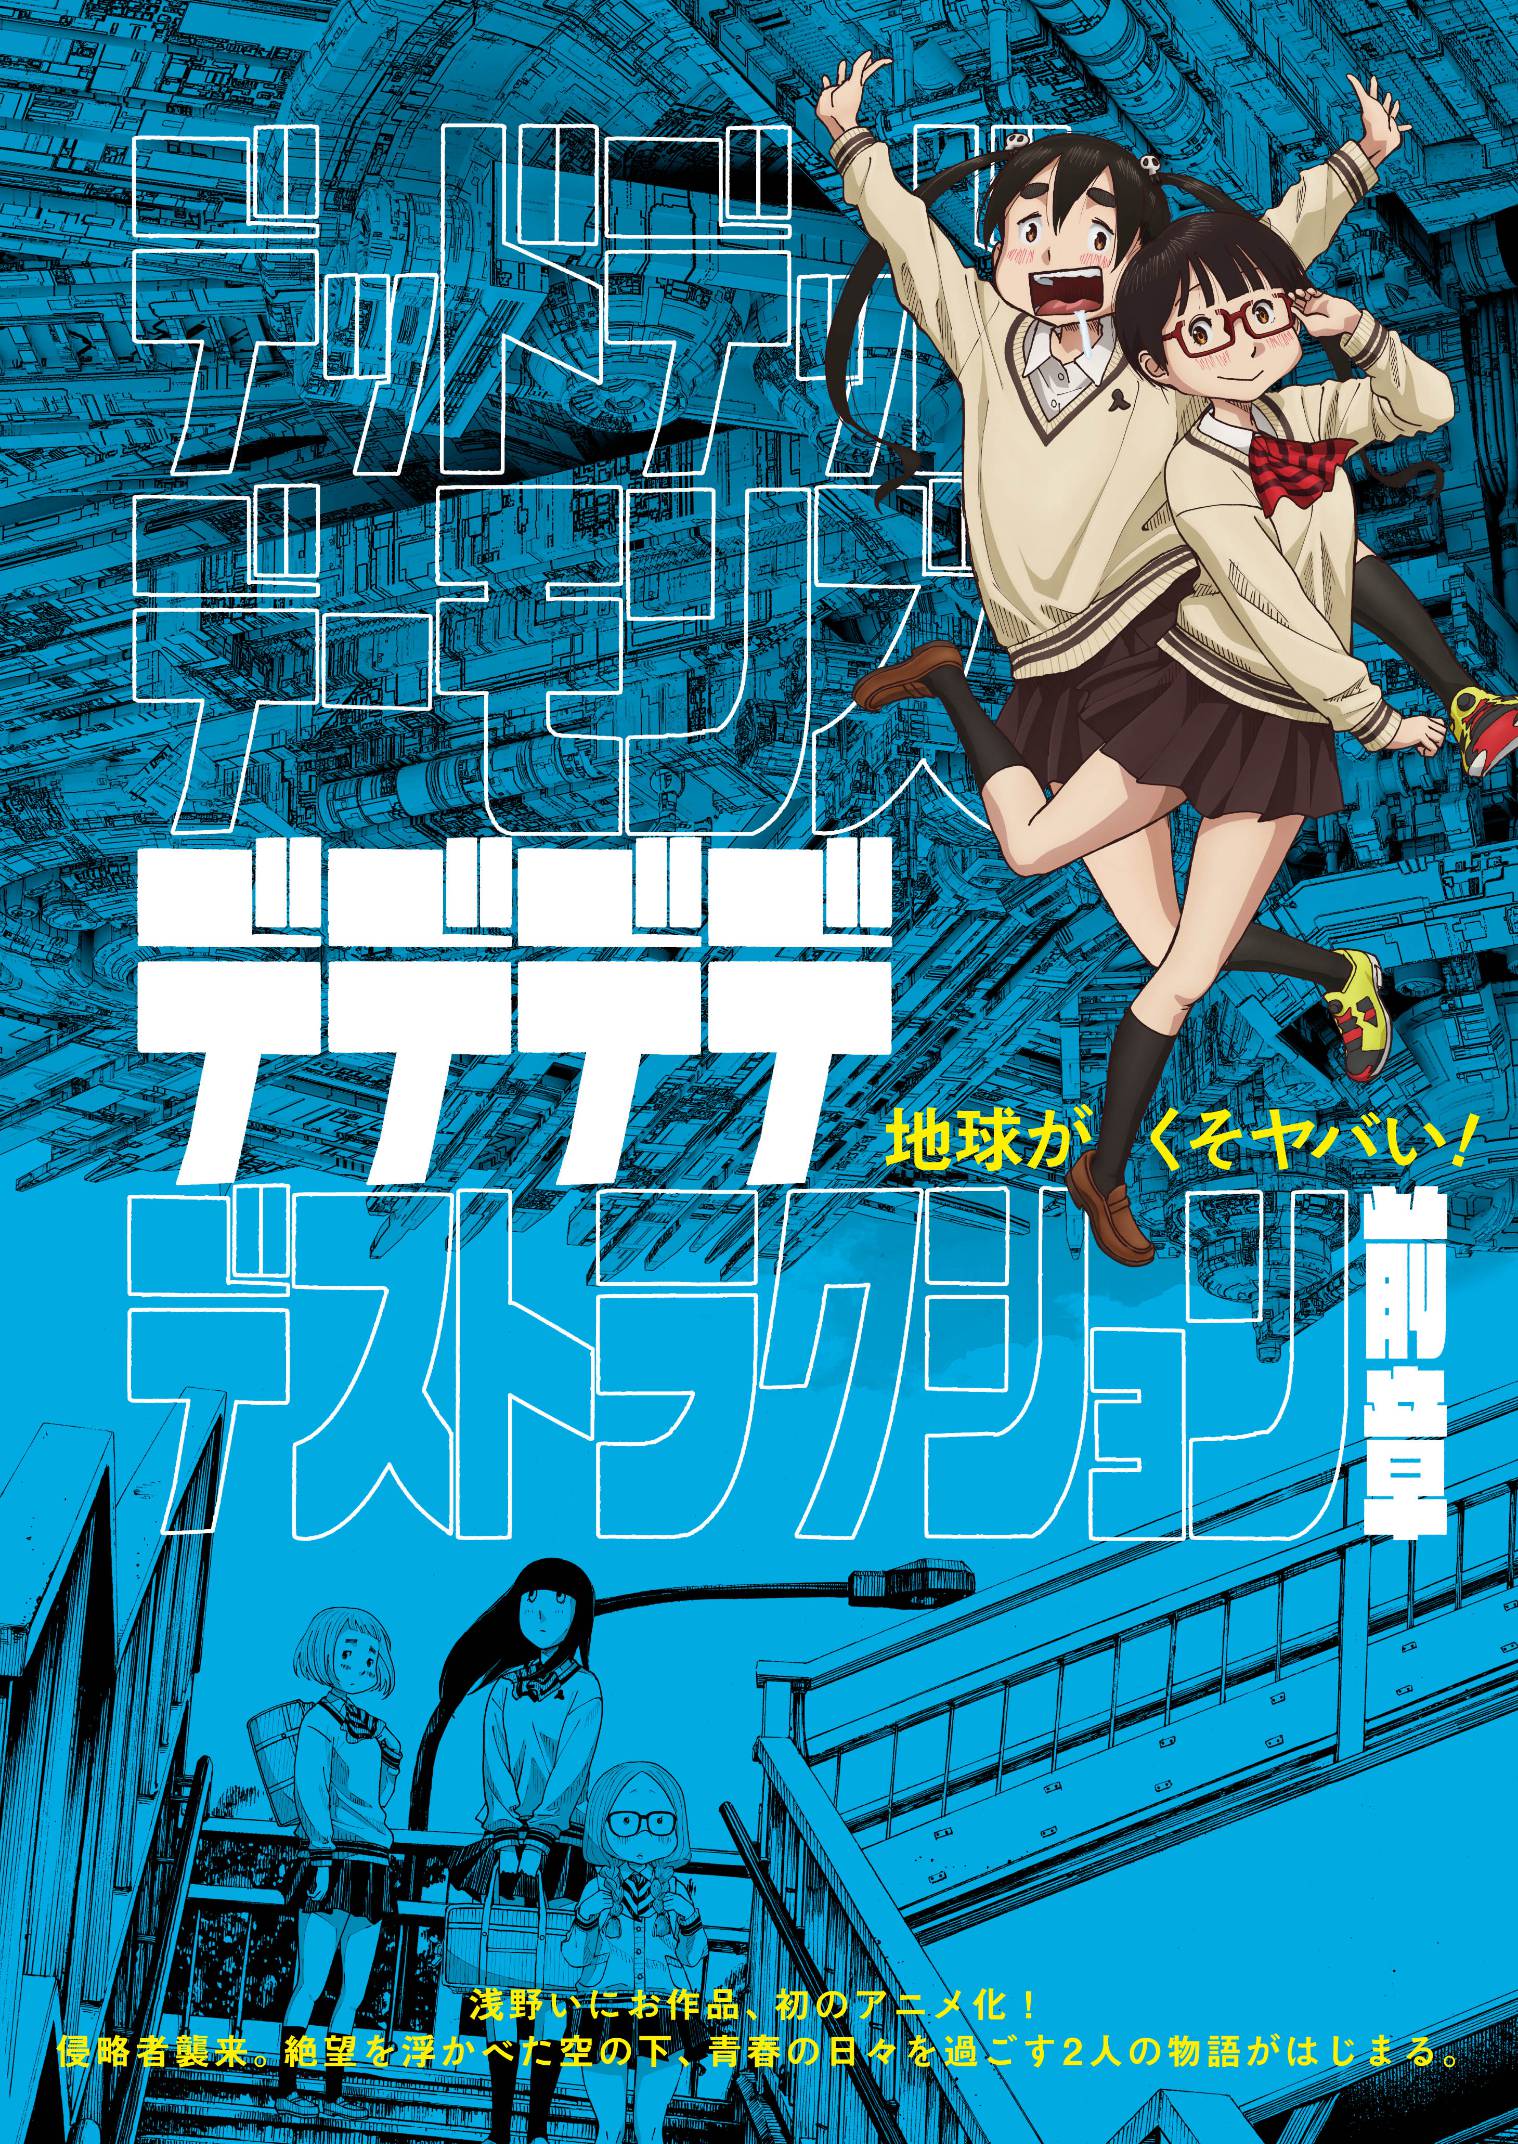 Various Artists) · TV Anime [cool Doji Danshi]special Event DVD